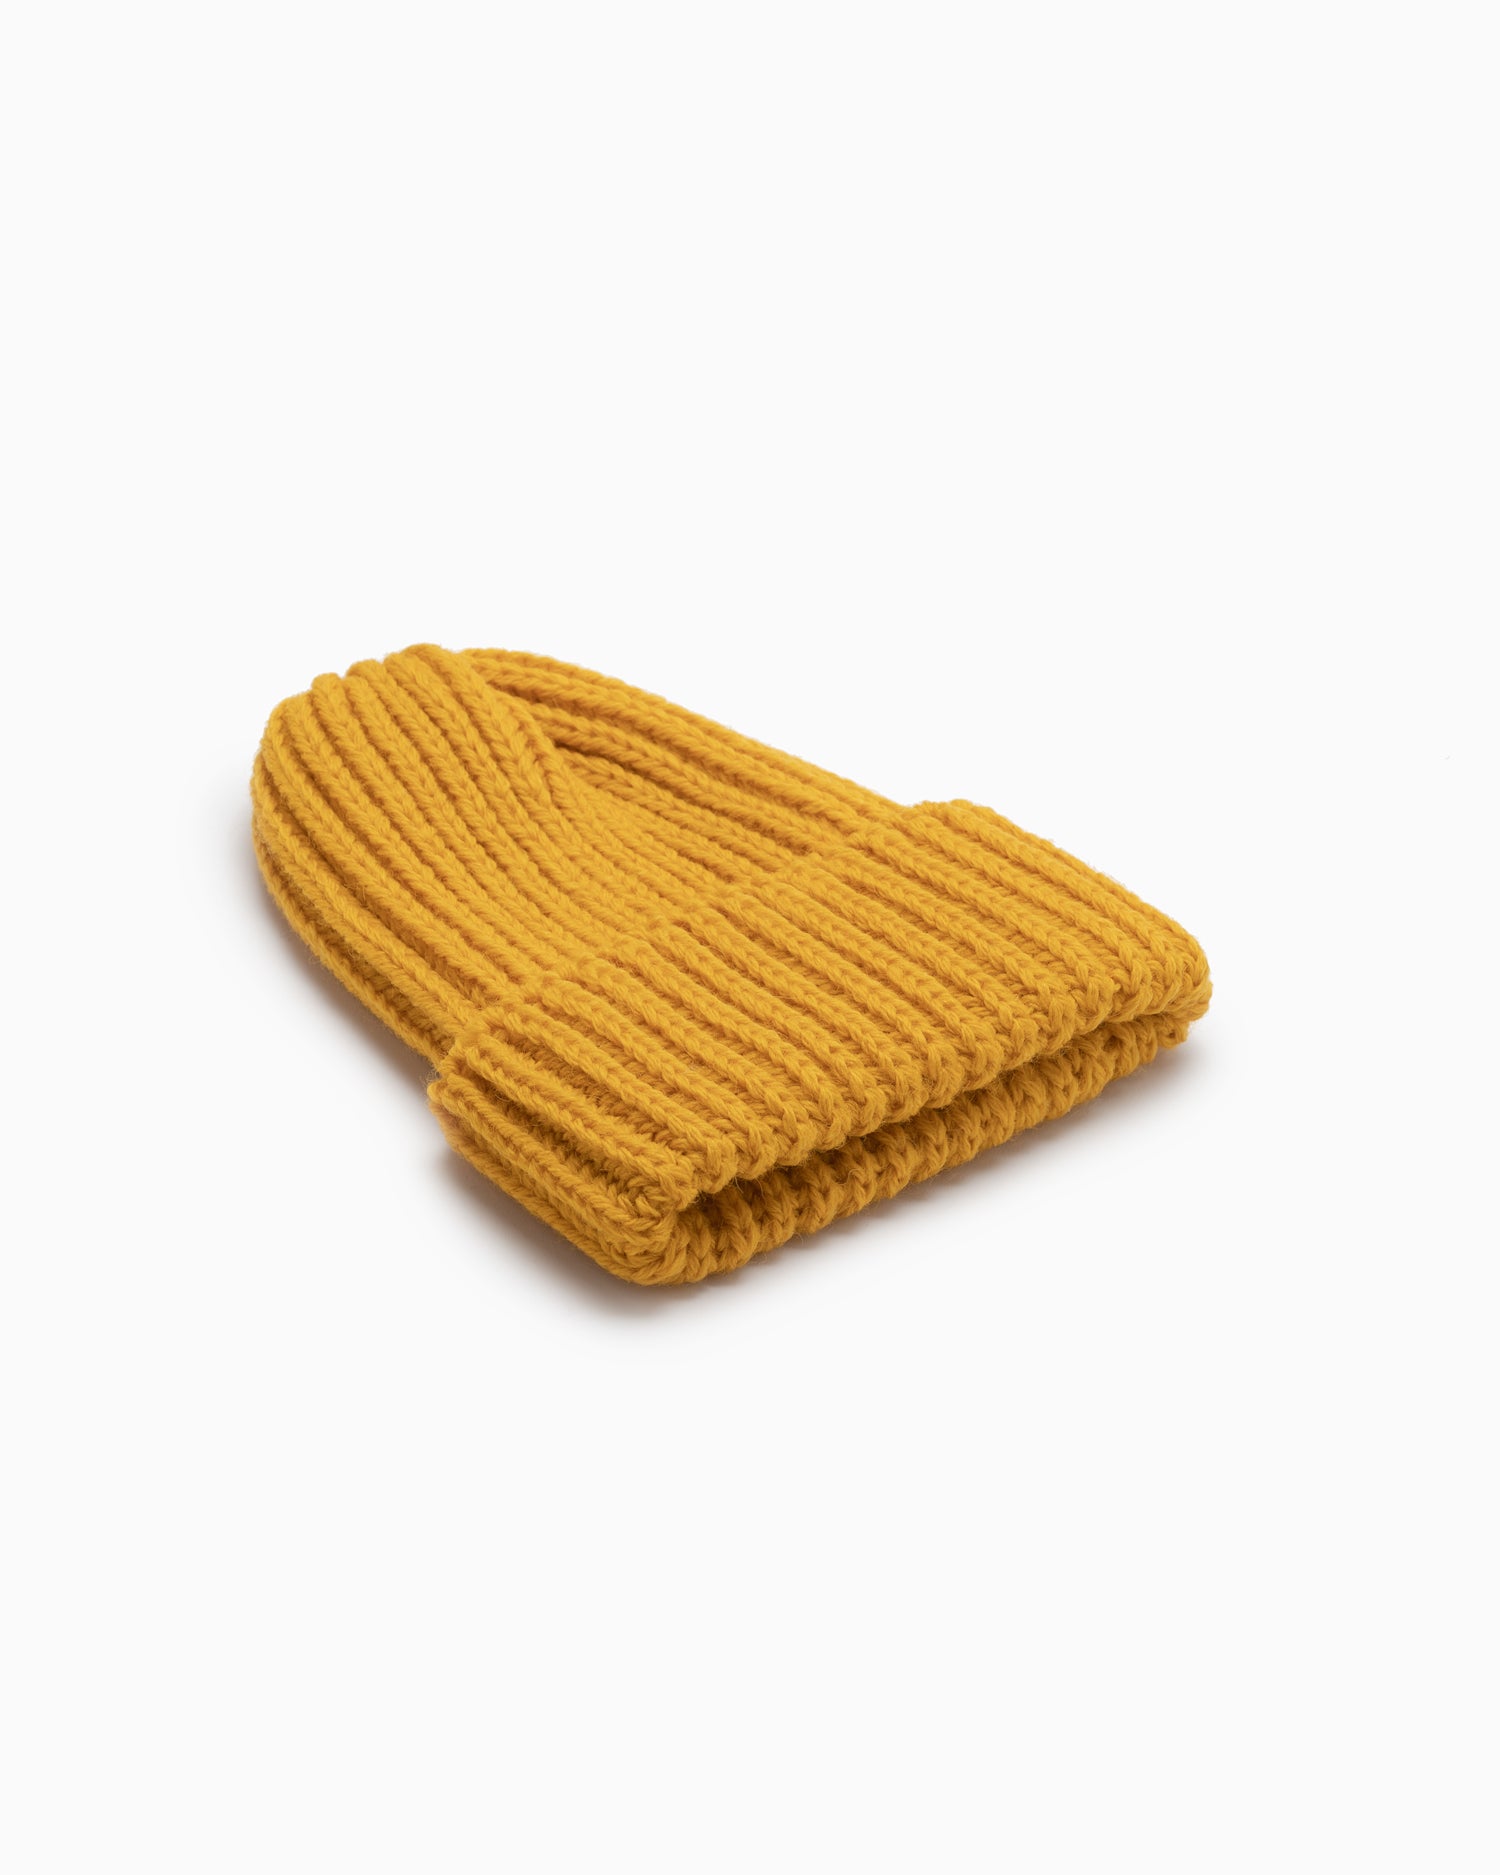 OFS. Chunky Knit Wool Hat - Mustard